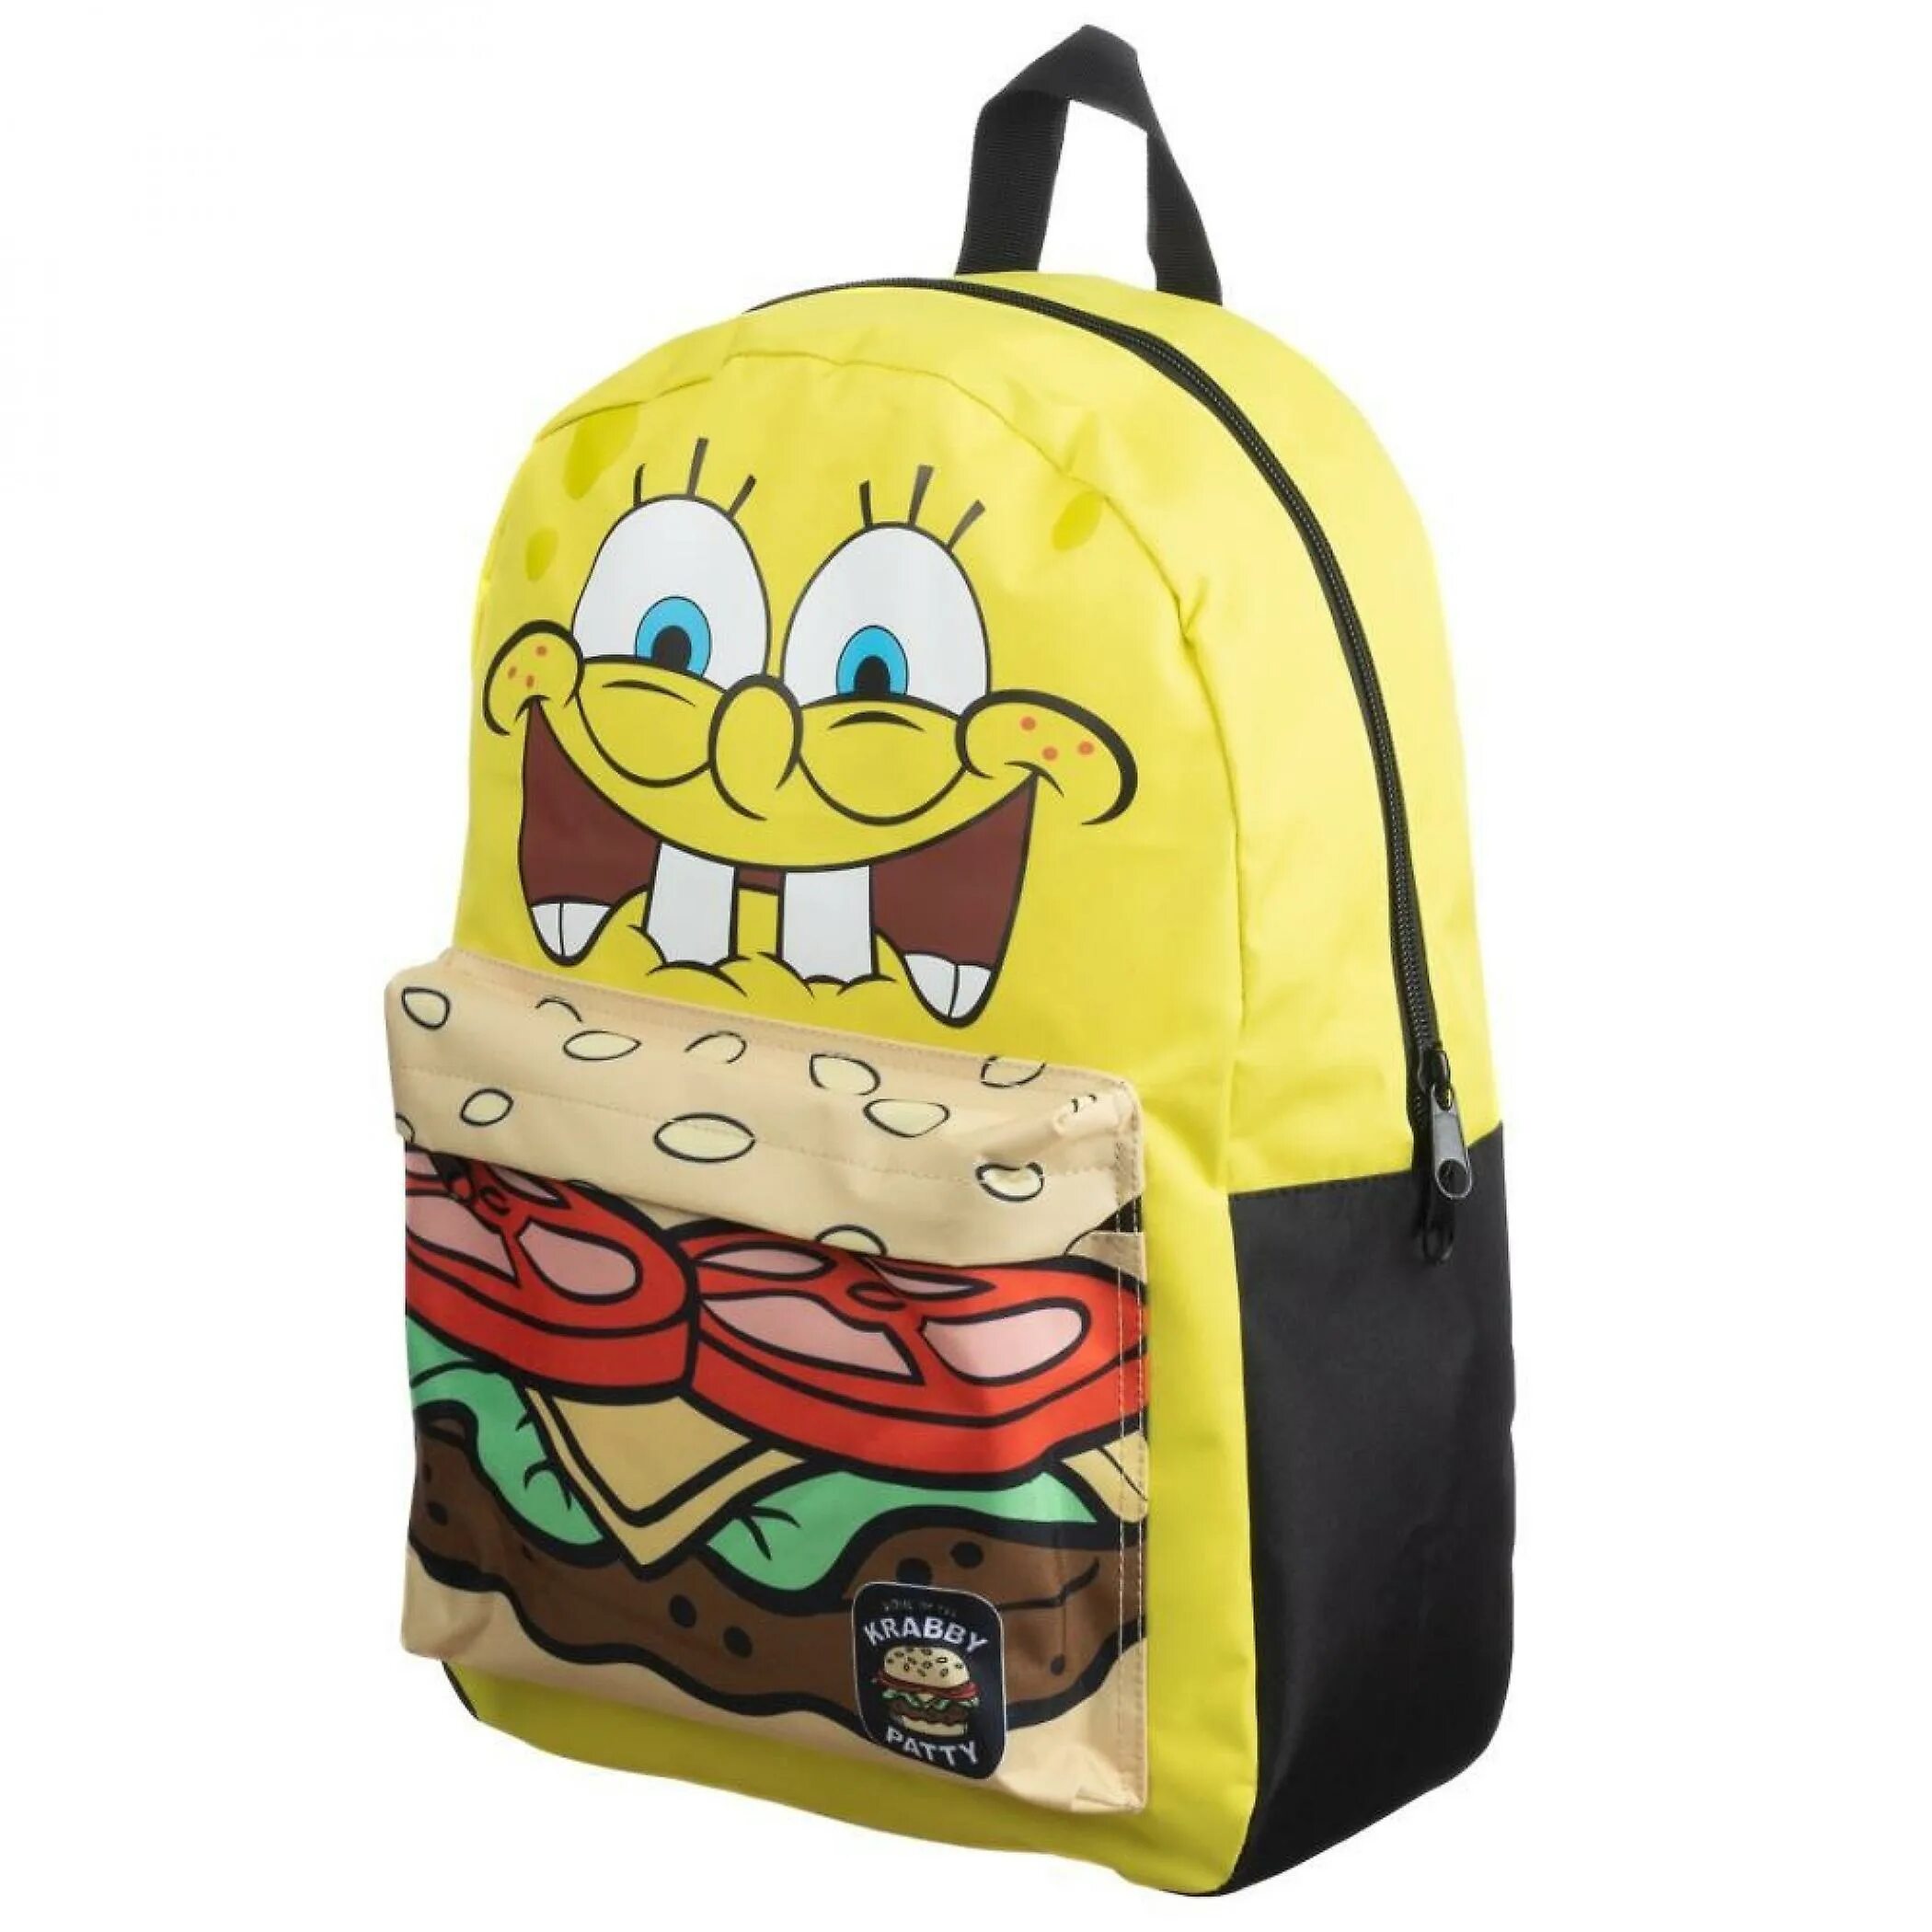 Spongebob pack. Loungefly рюкзак Spongebob: Jelly Fishing Mini. Рюкзак × Spongebob Squarepants old Skool III|. Губка Боб квадратные штаны рюкзак. Burger Backpack Spongebob.